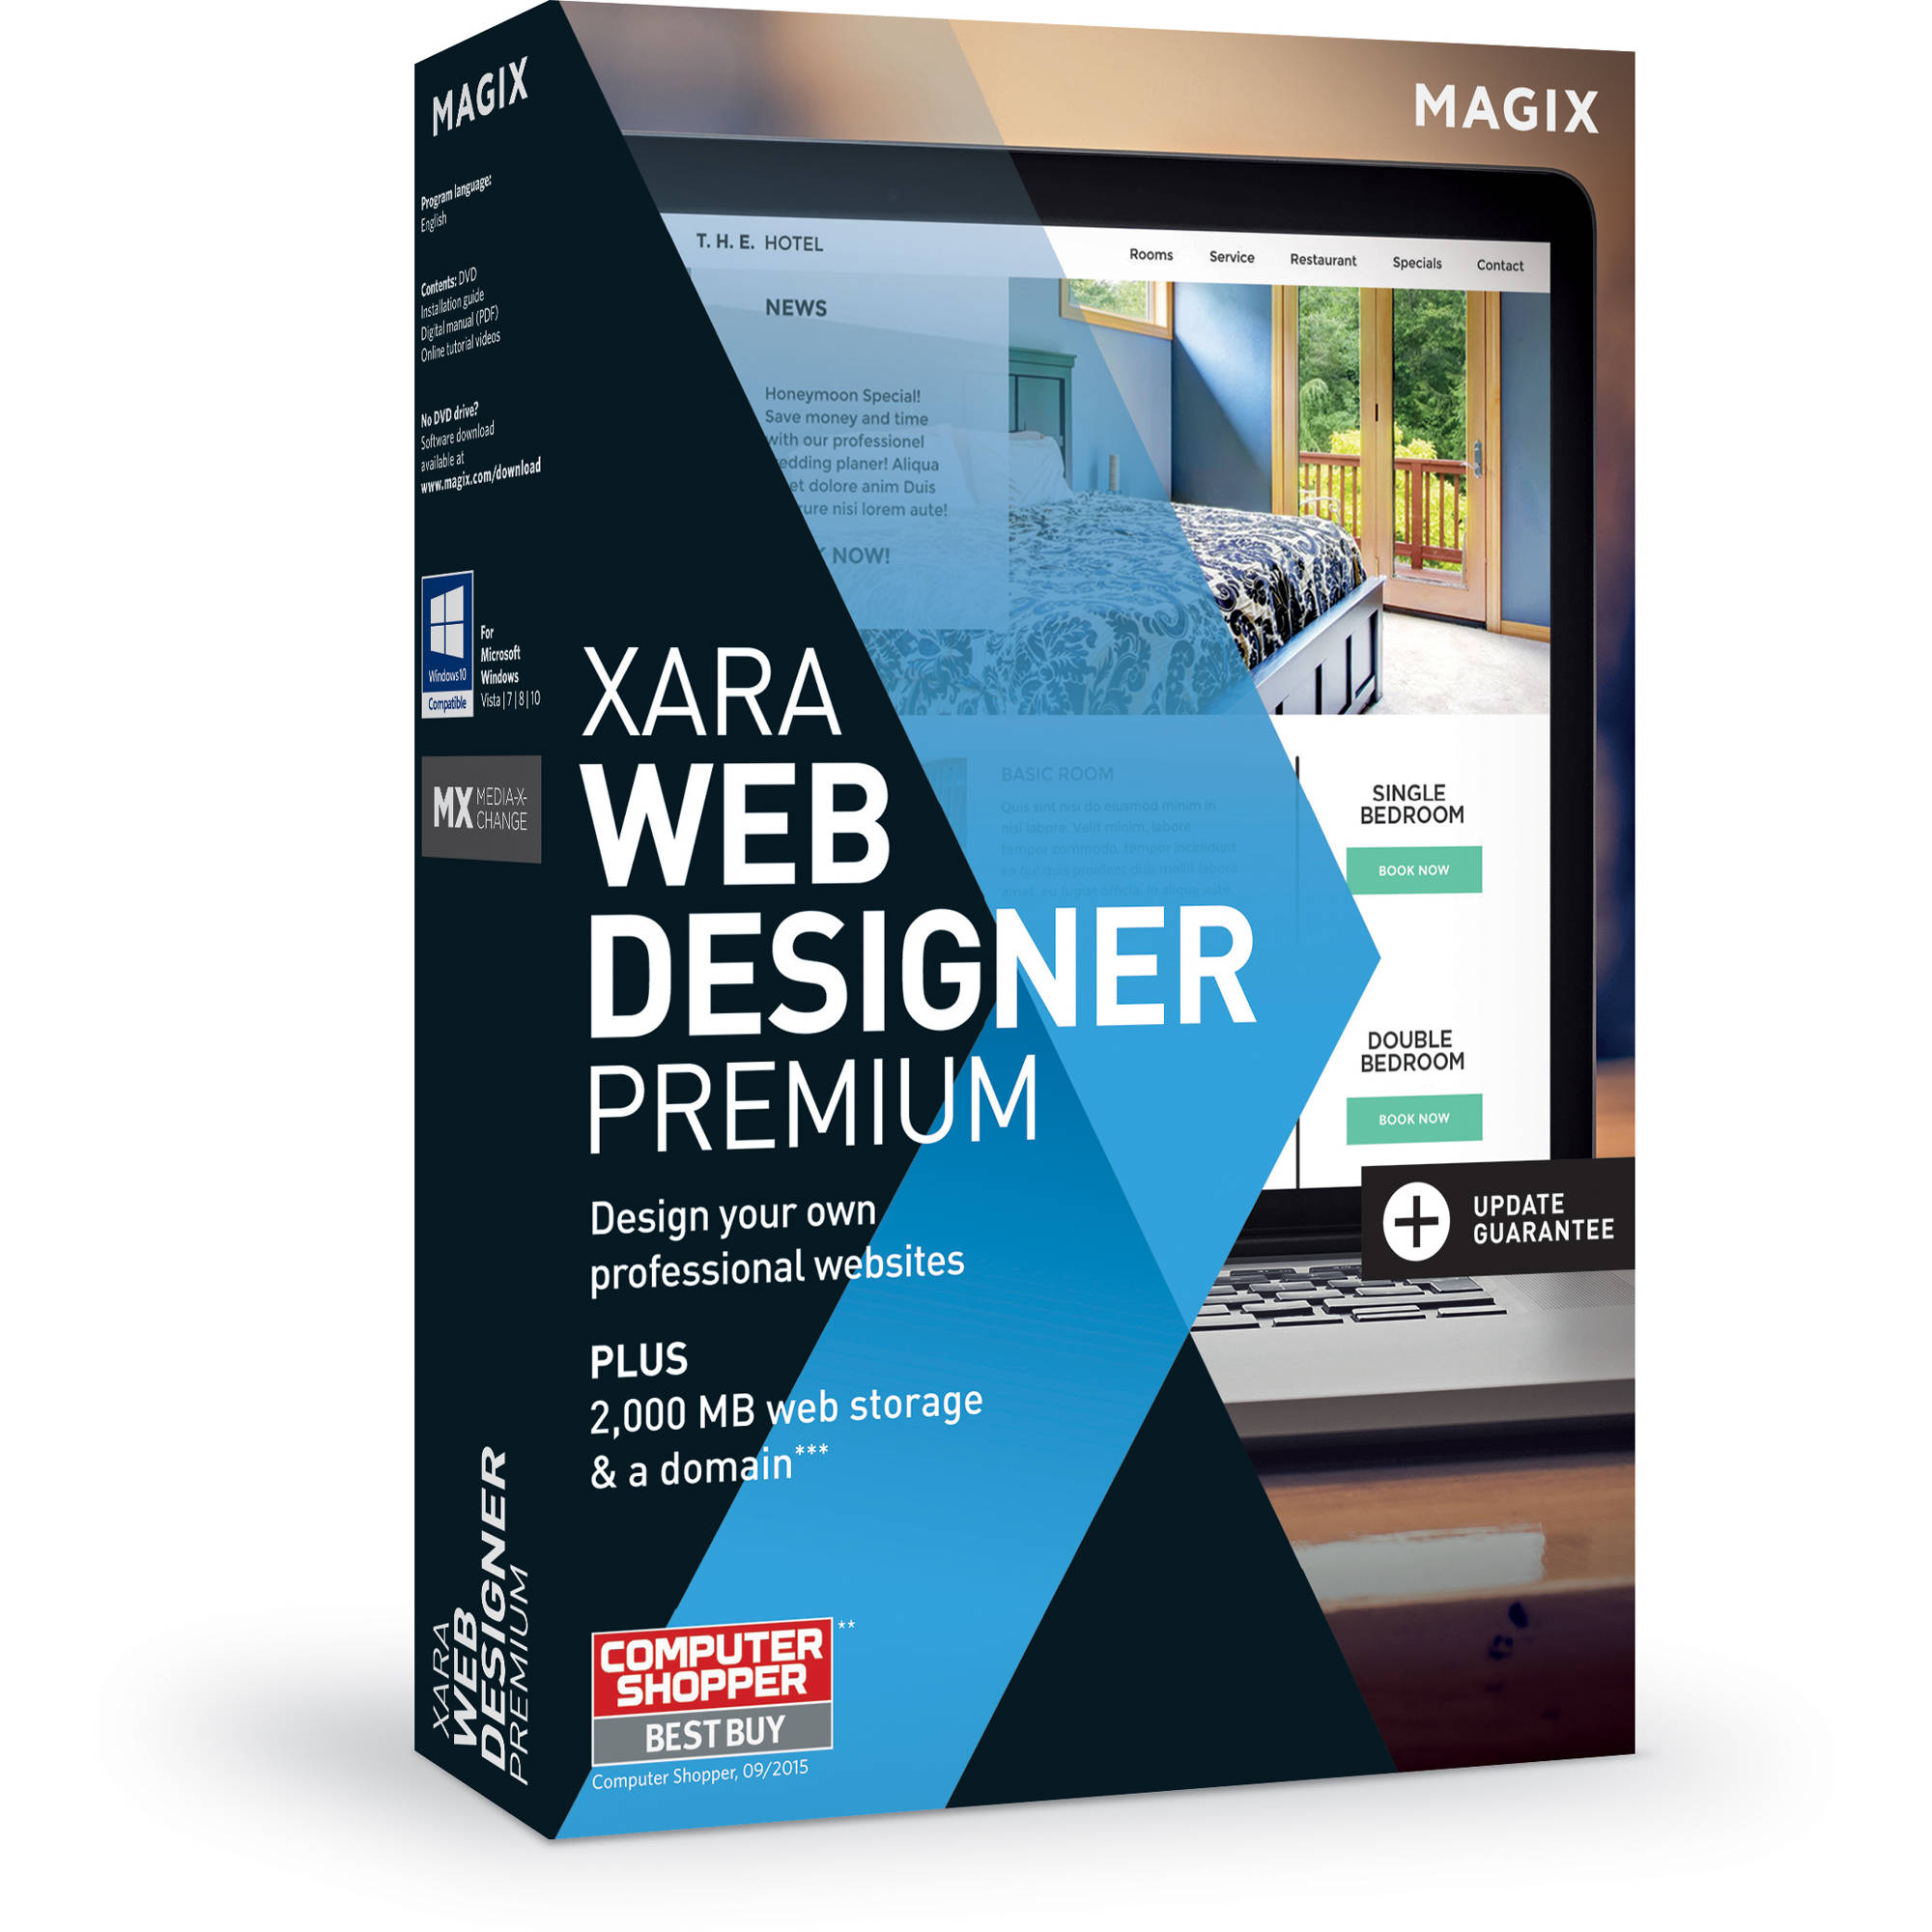 xara web designer premium review